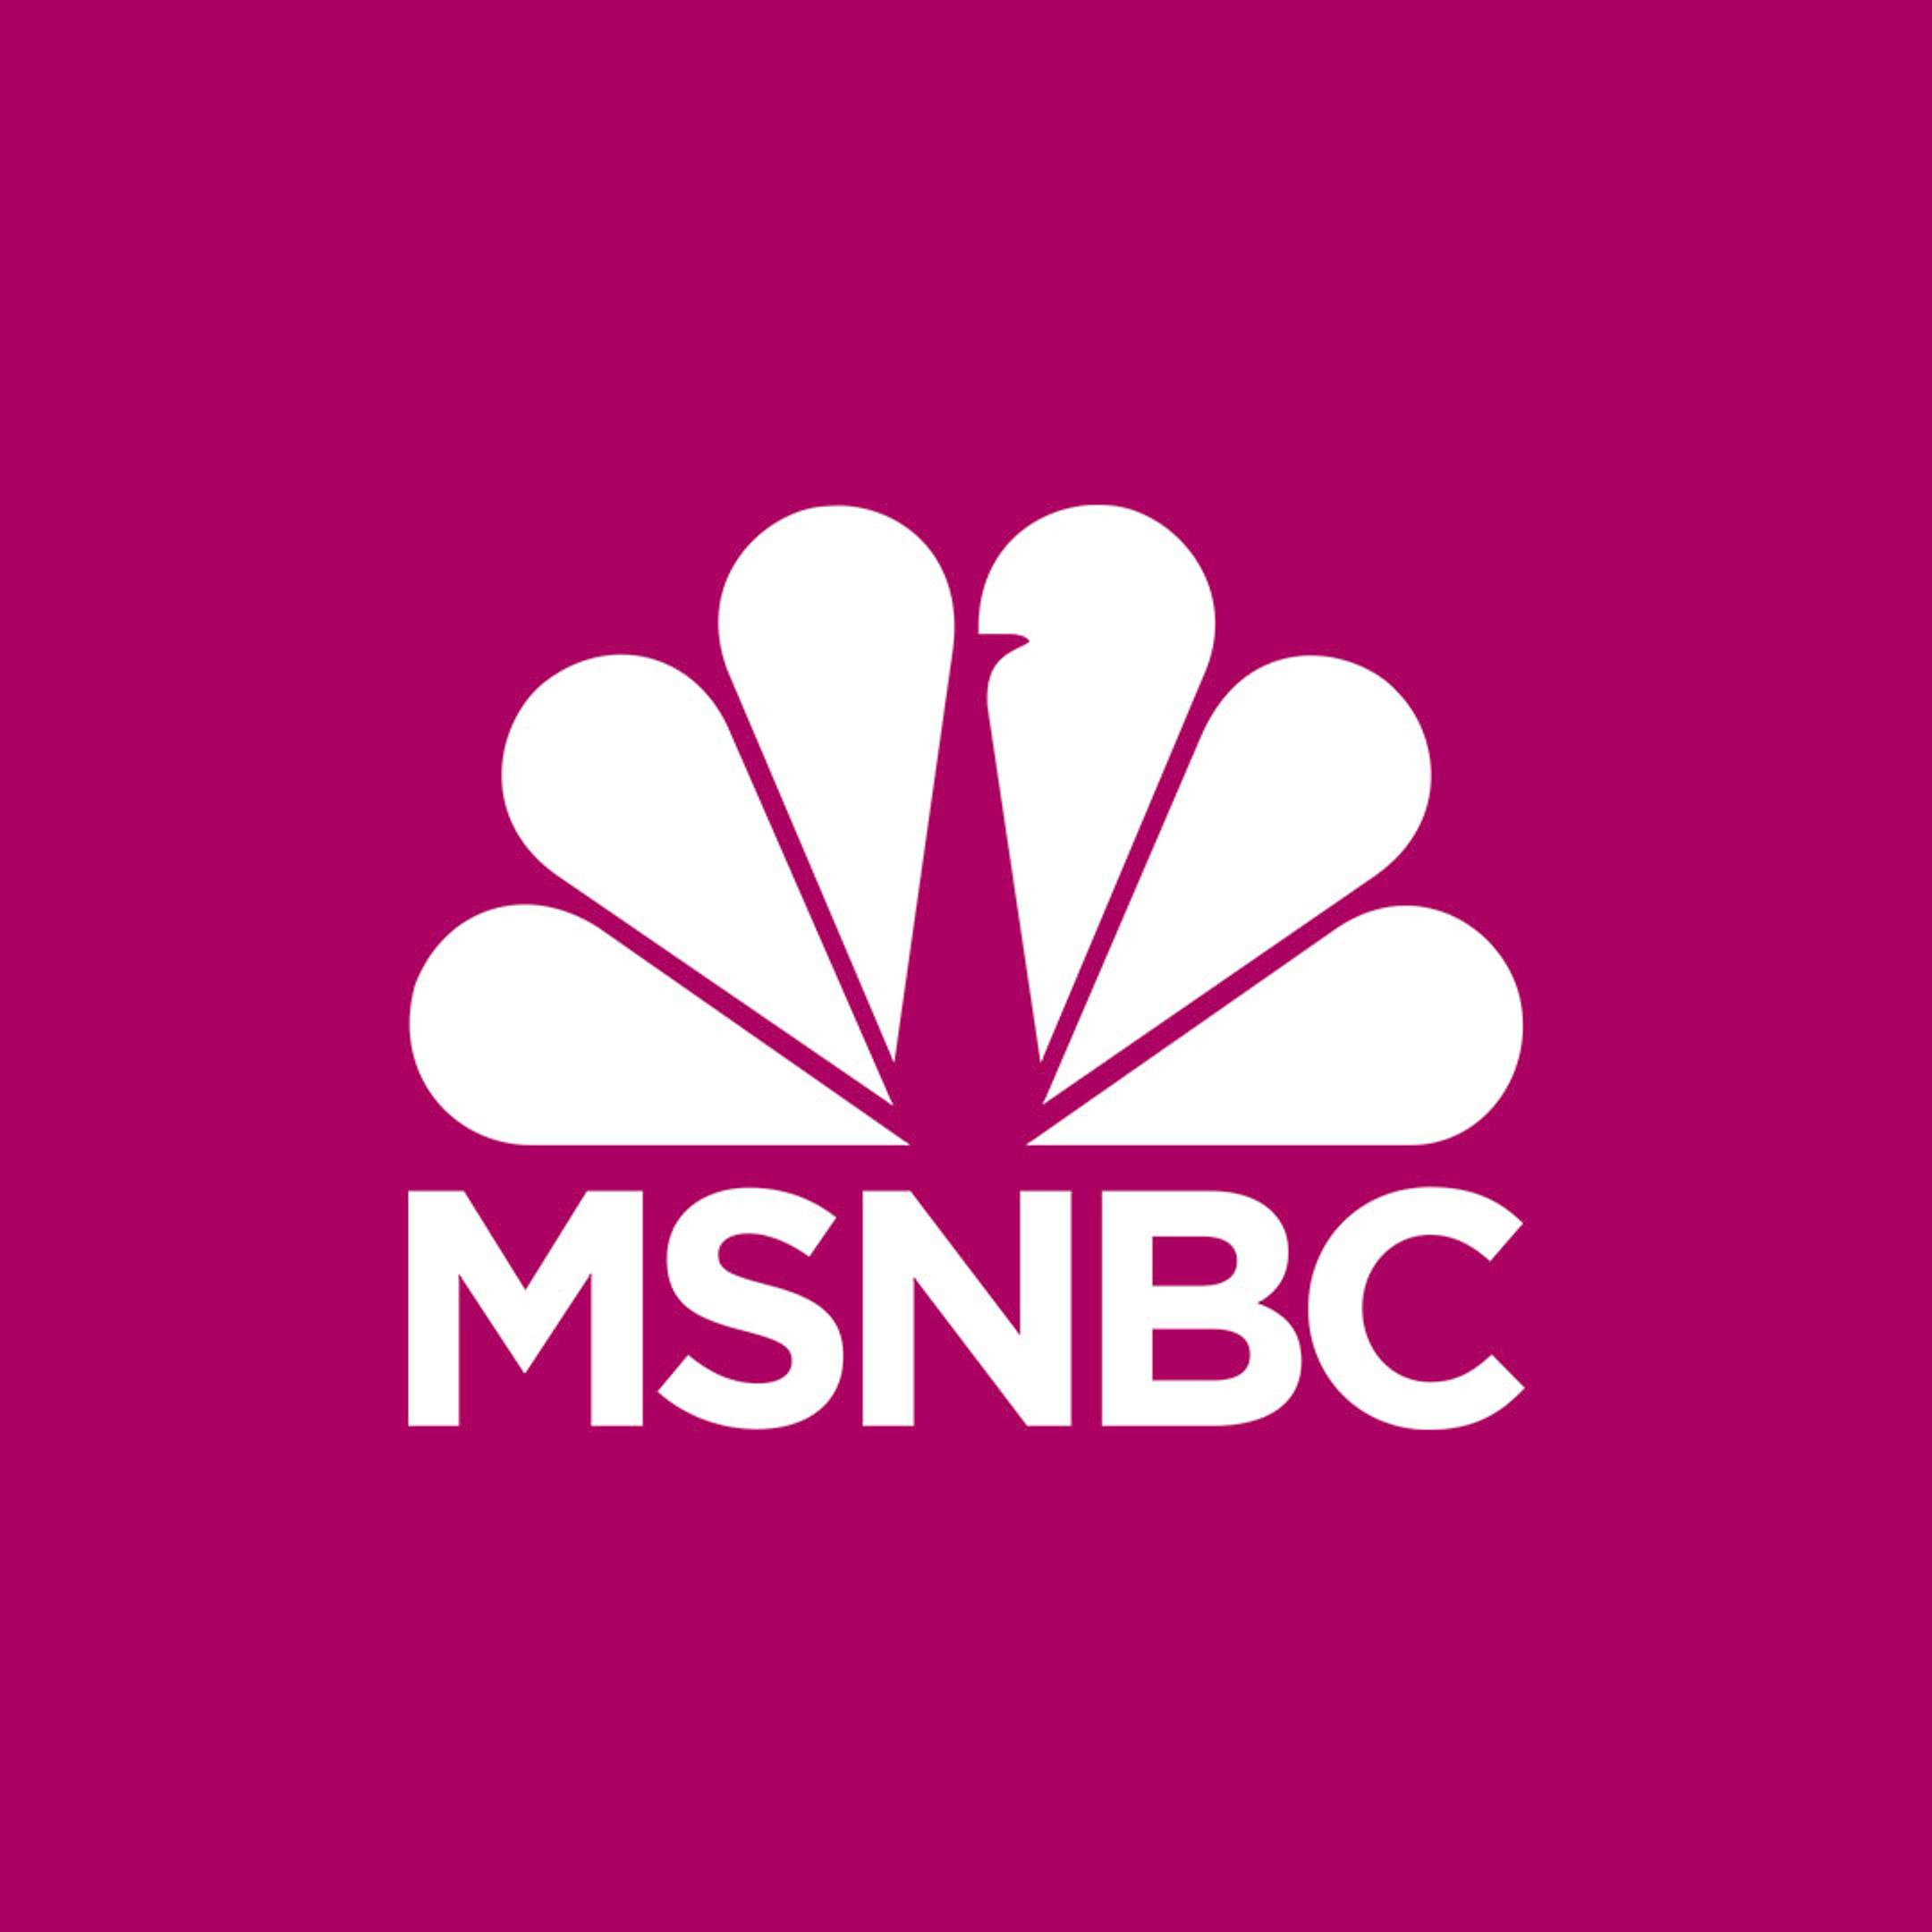 MSNBC logo on magenta background 